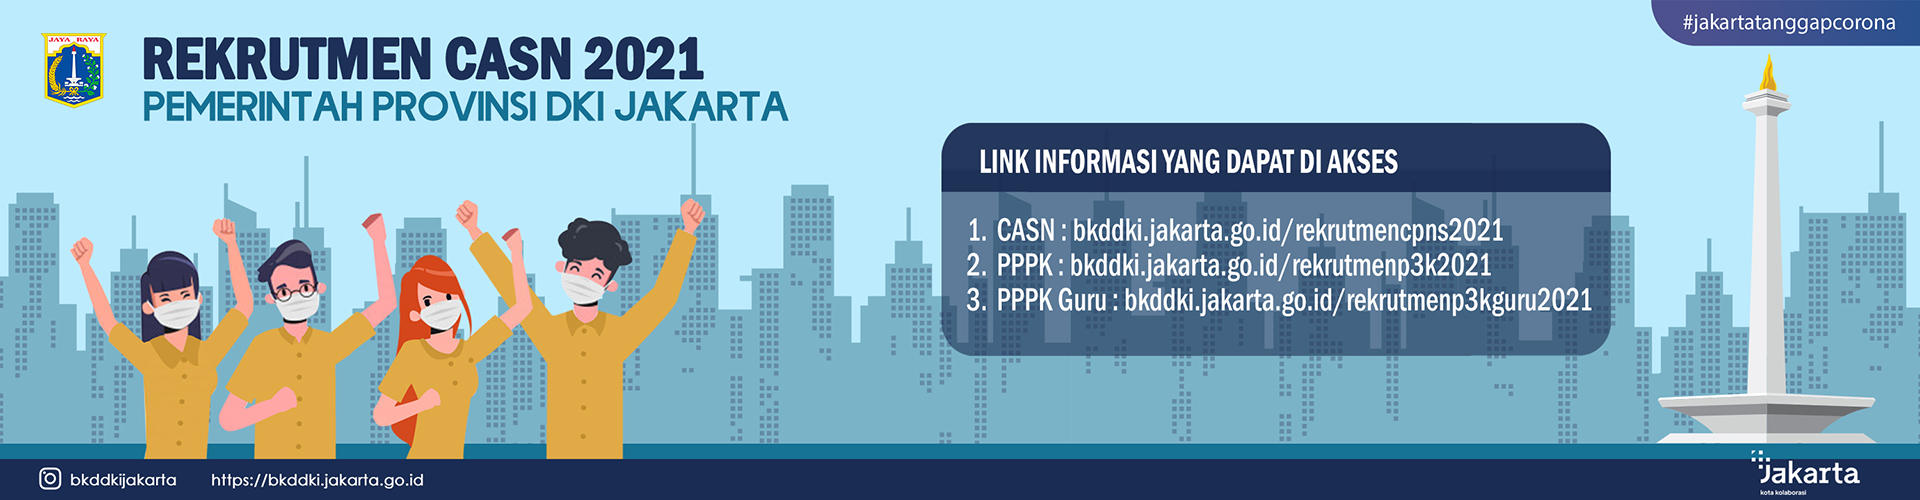 Rekrutmen Calon Aparatur Sipil Negara (CASN) Pemerintah Provinsi DKI Jakarta Tahun 2021